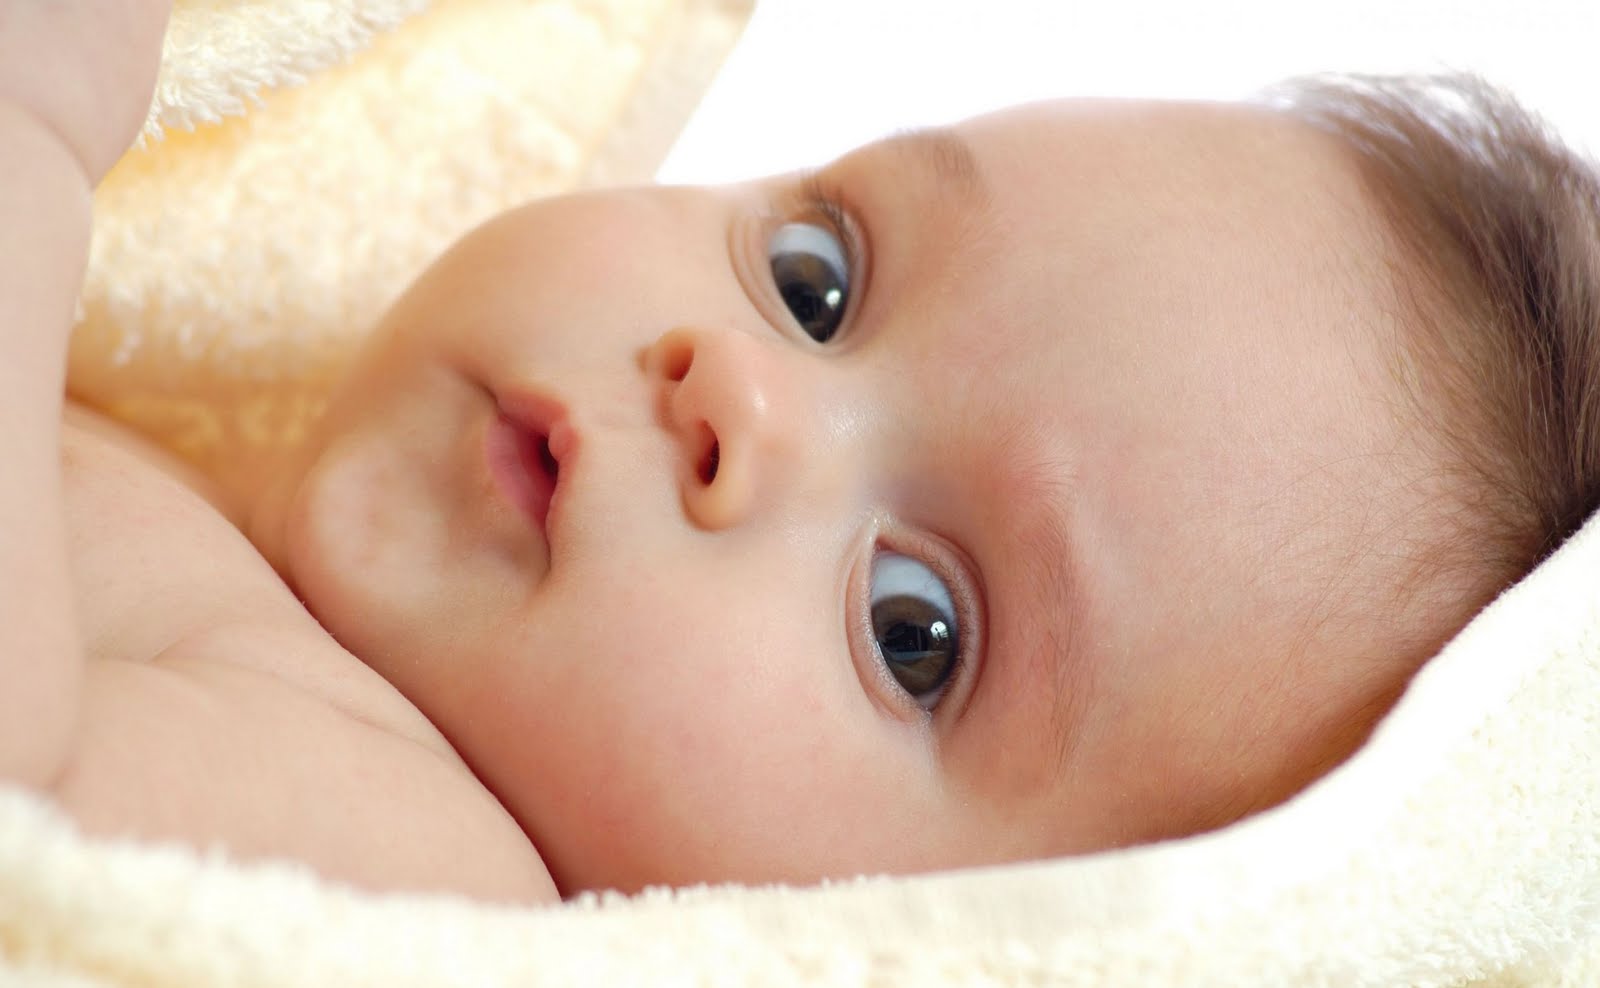 newborn baby photos free